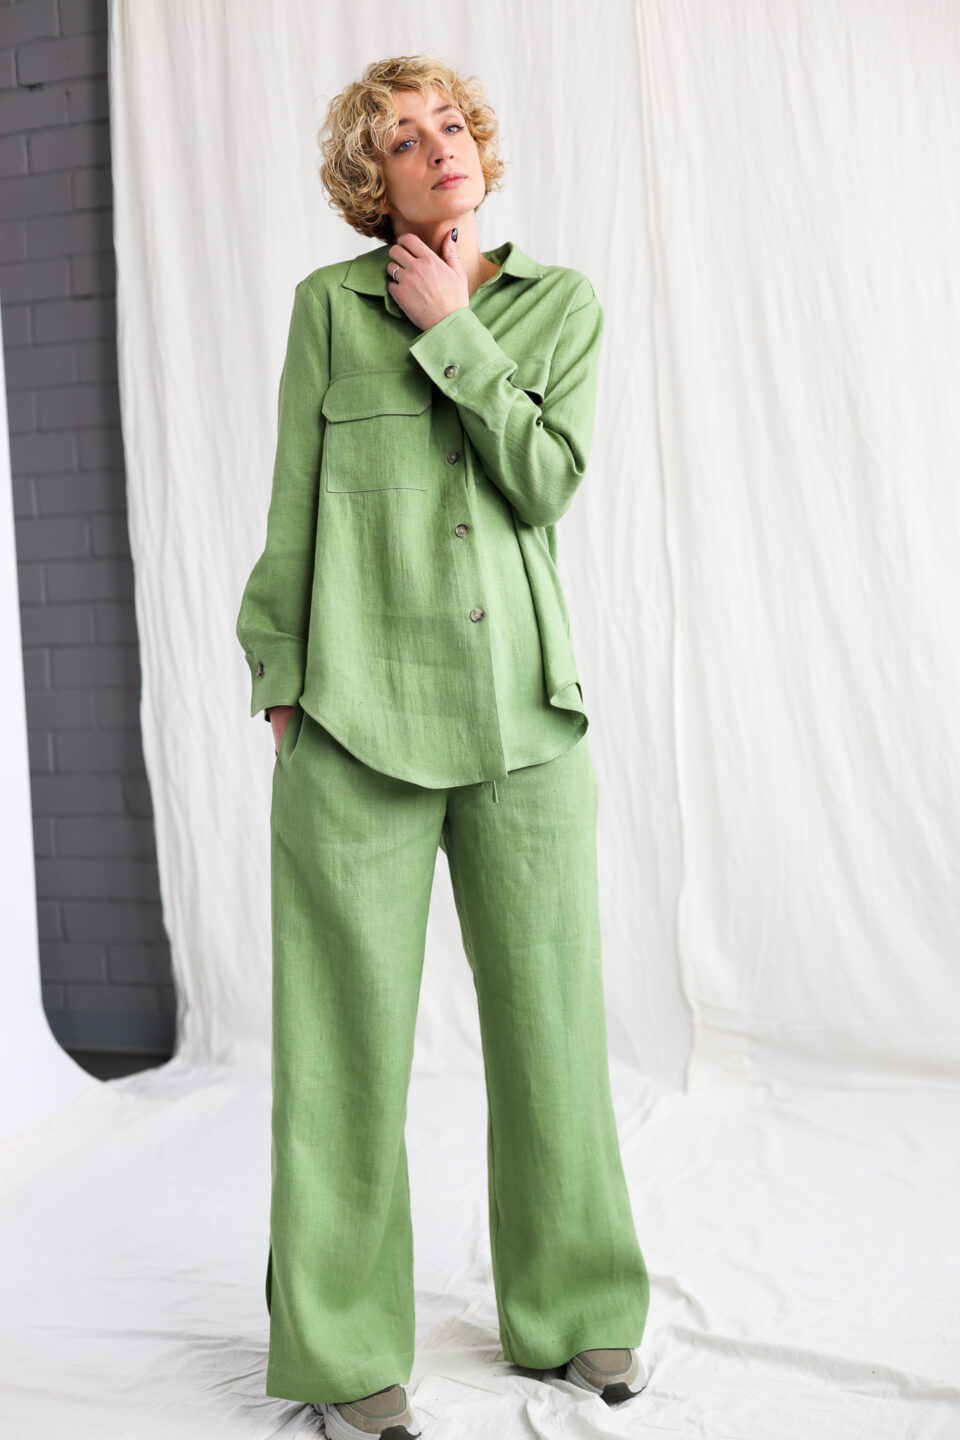 Linen oversized shirt and elasticated waist pants suit | Suit | Foliage | Sustainable clothing | OffOn clothing